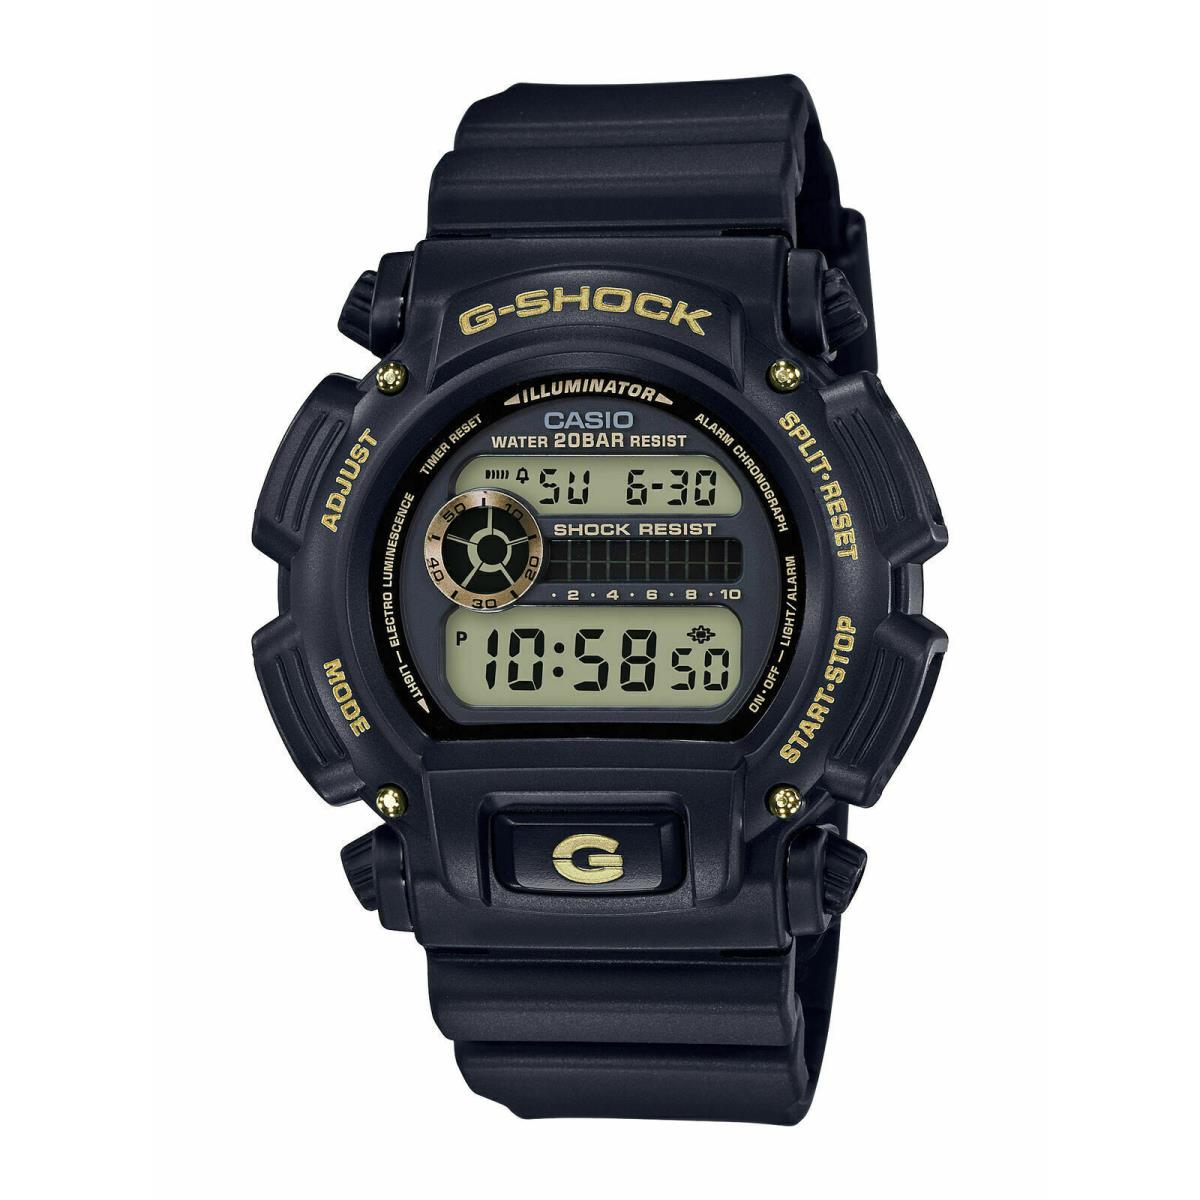 Casio DW9052GBX-1A9 G-shock Chronograph Watch Resin Band Alarm 200 Meter WR